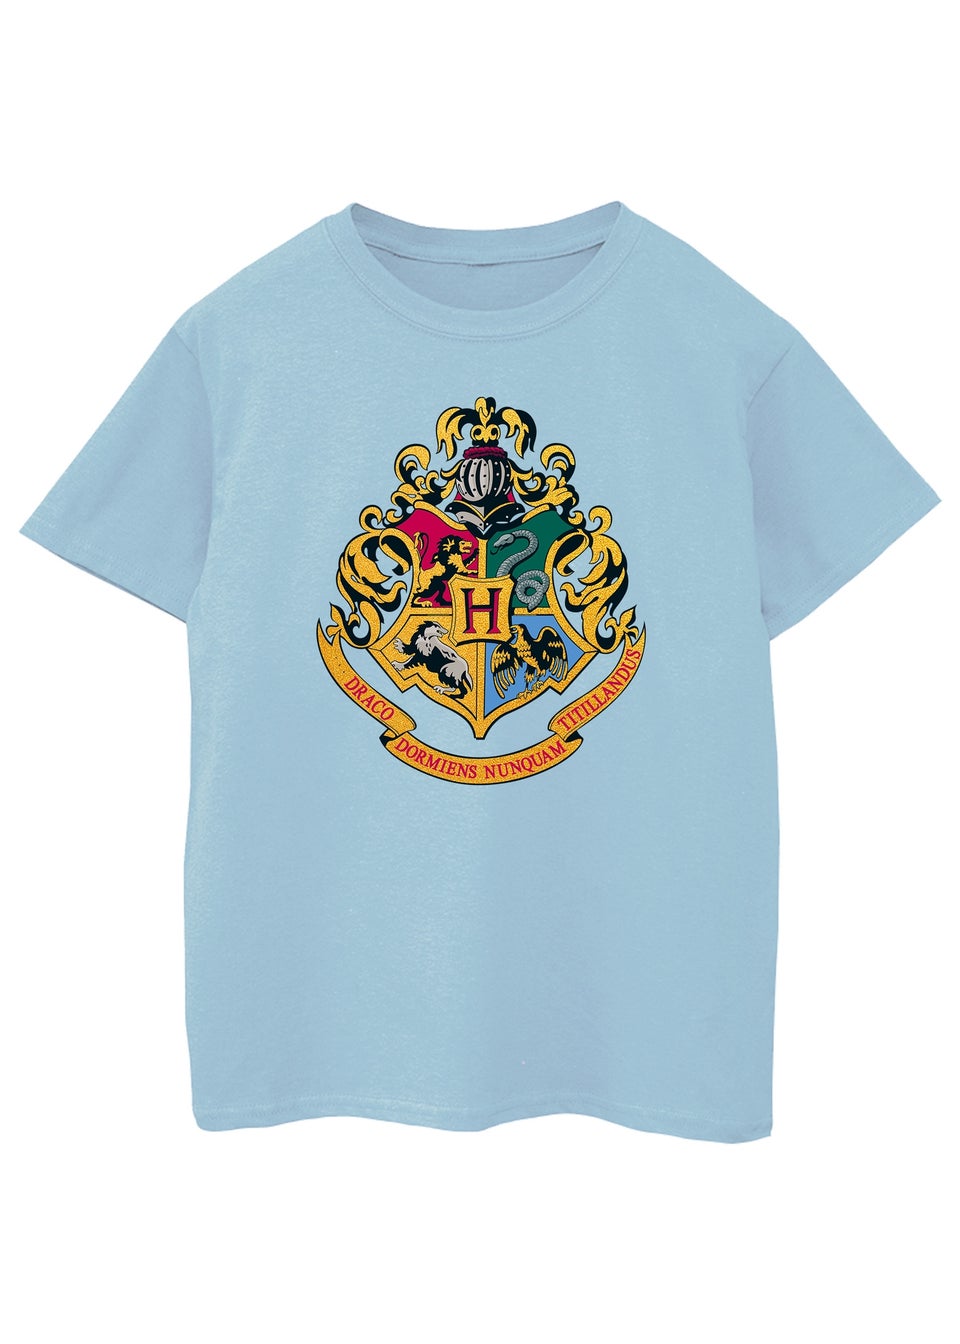 Harry Potter Kids Baby Blue Hogwarts Crest Printed T-Shirt (3-13 yrs)